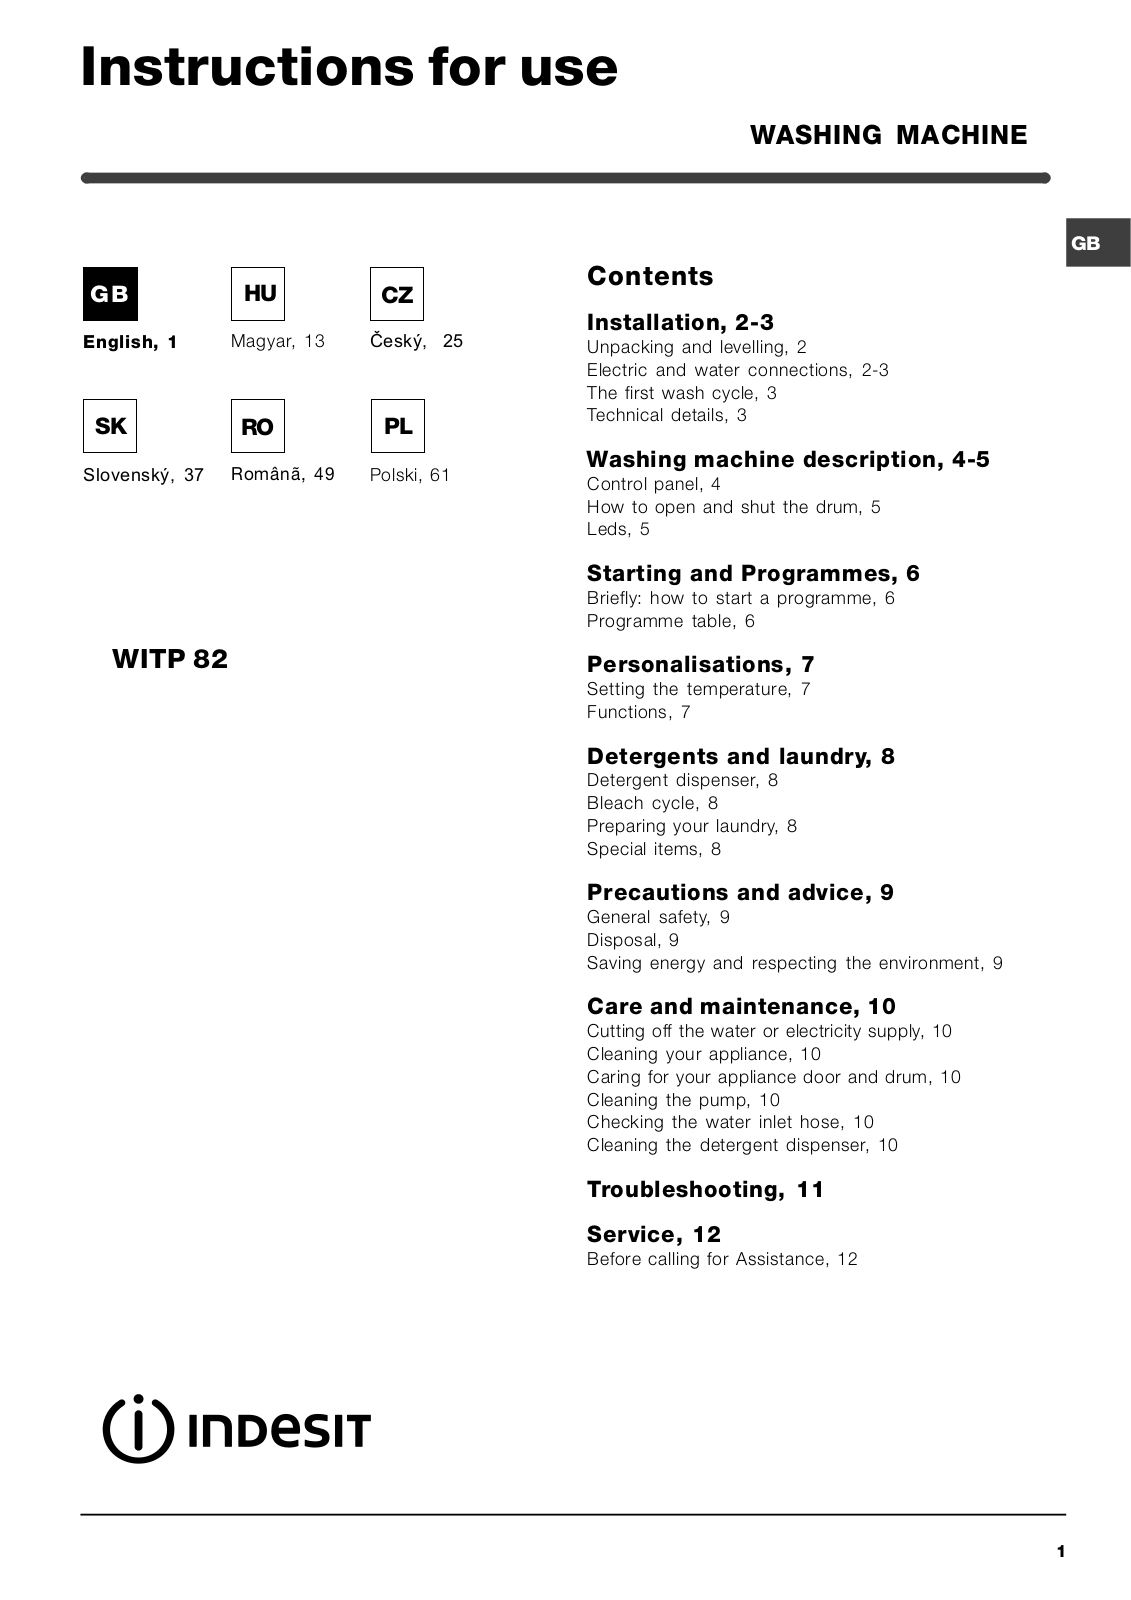 Indesit WITP 82 User Manual